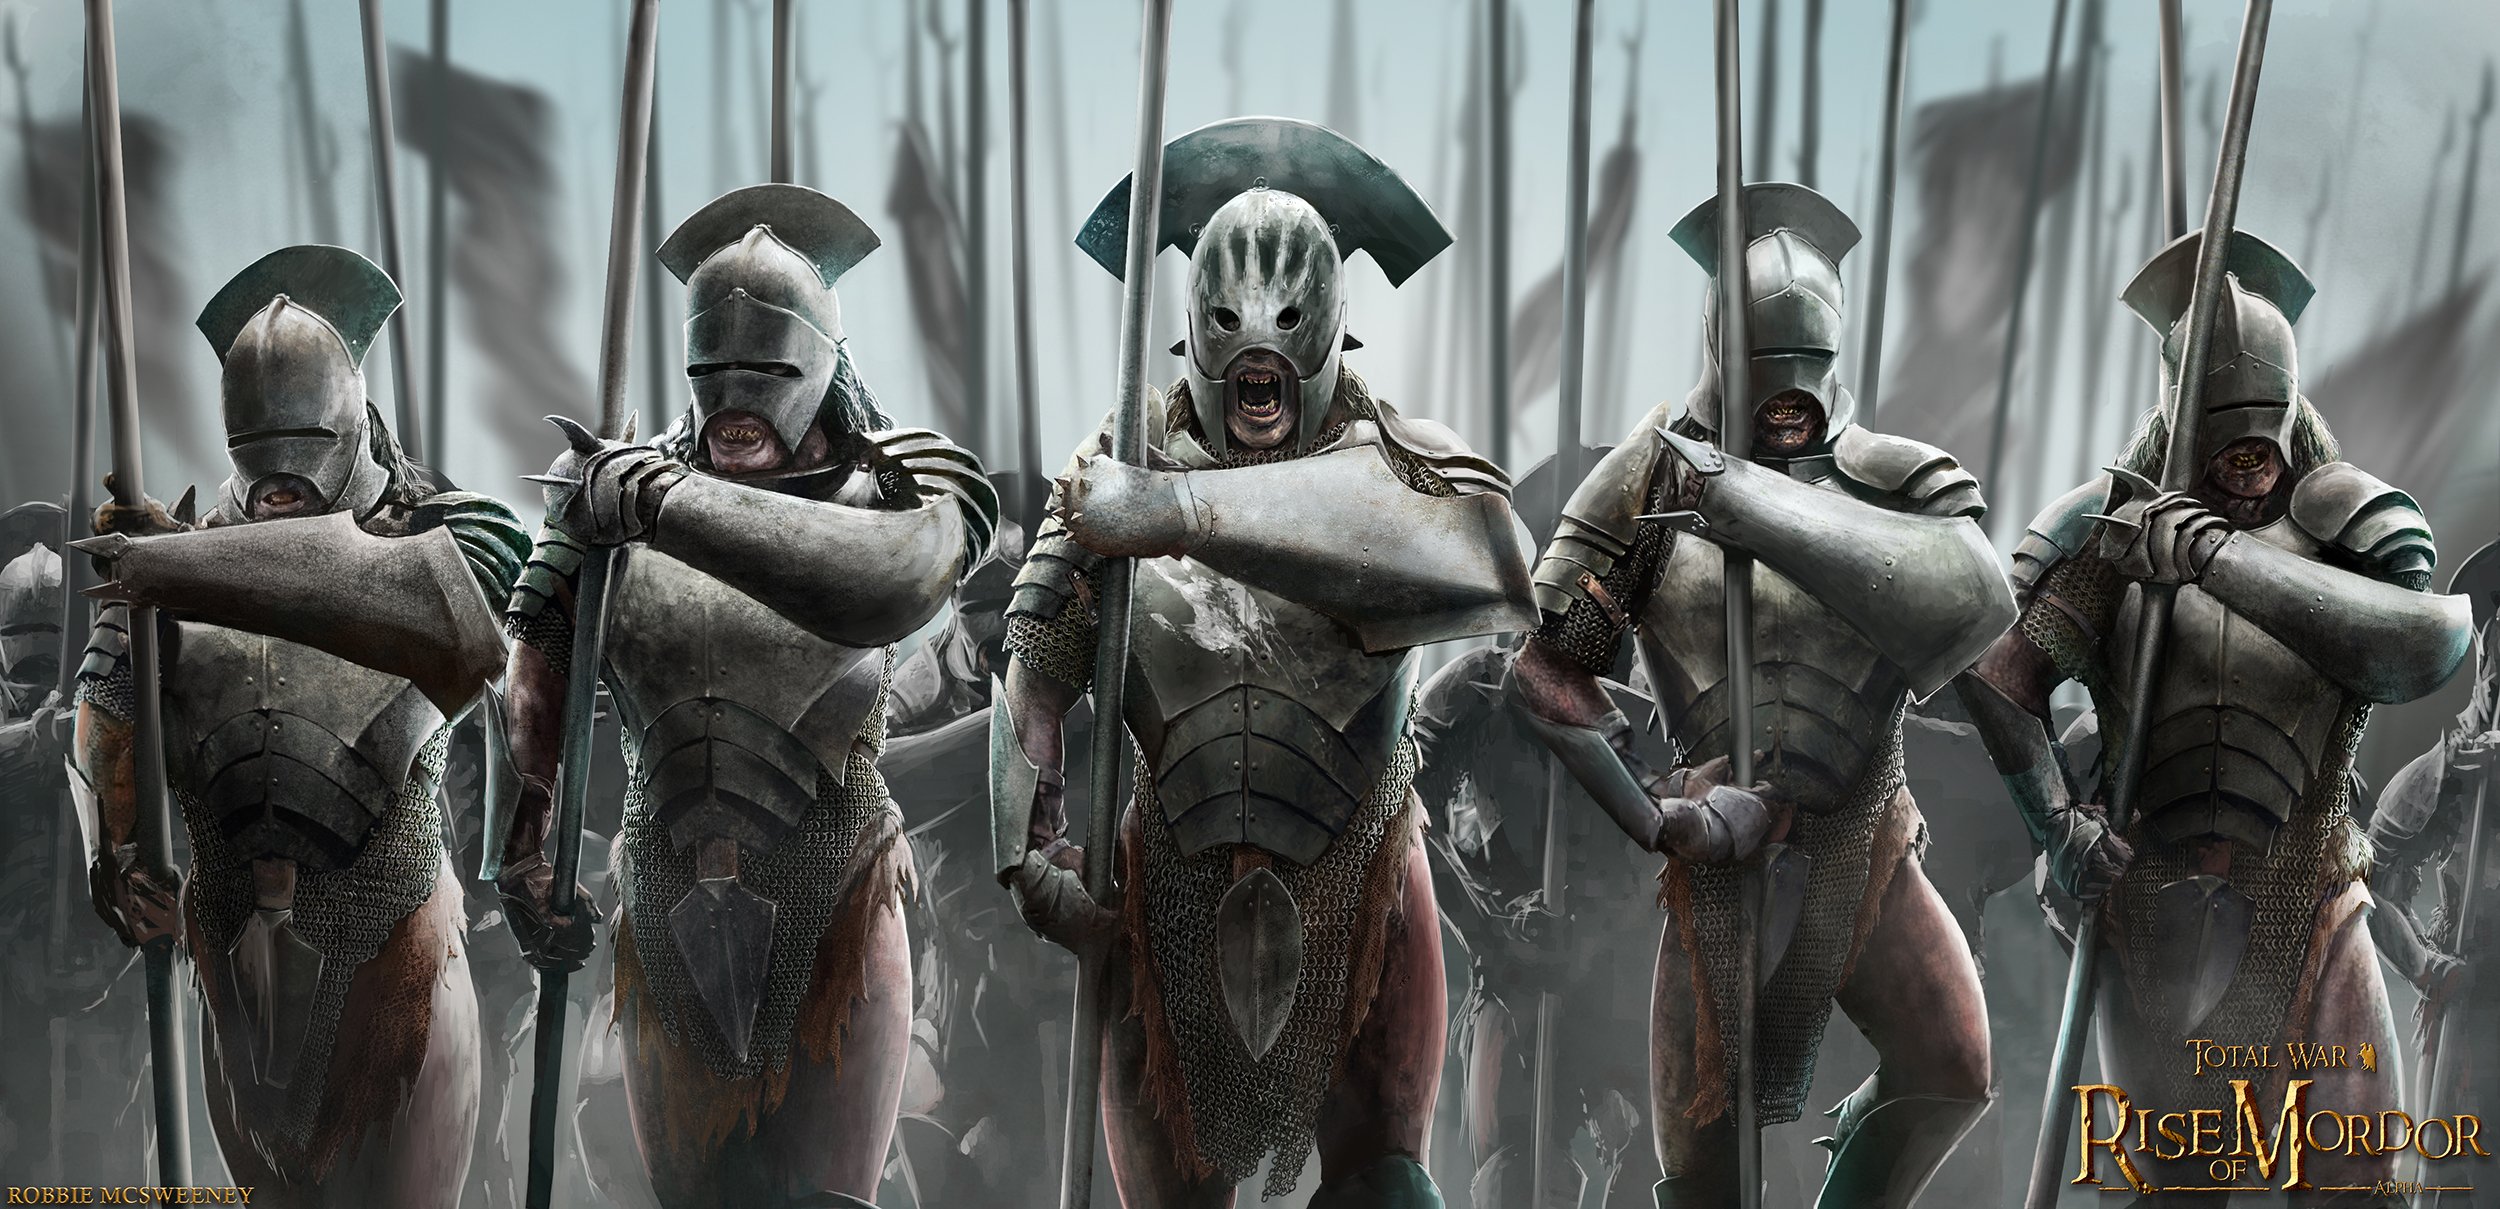 Uruk Hai Pikemen Promo Art Image War: Rise Of Mordor Mod